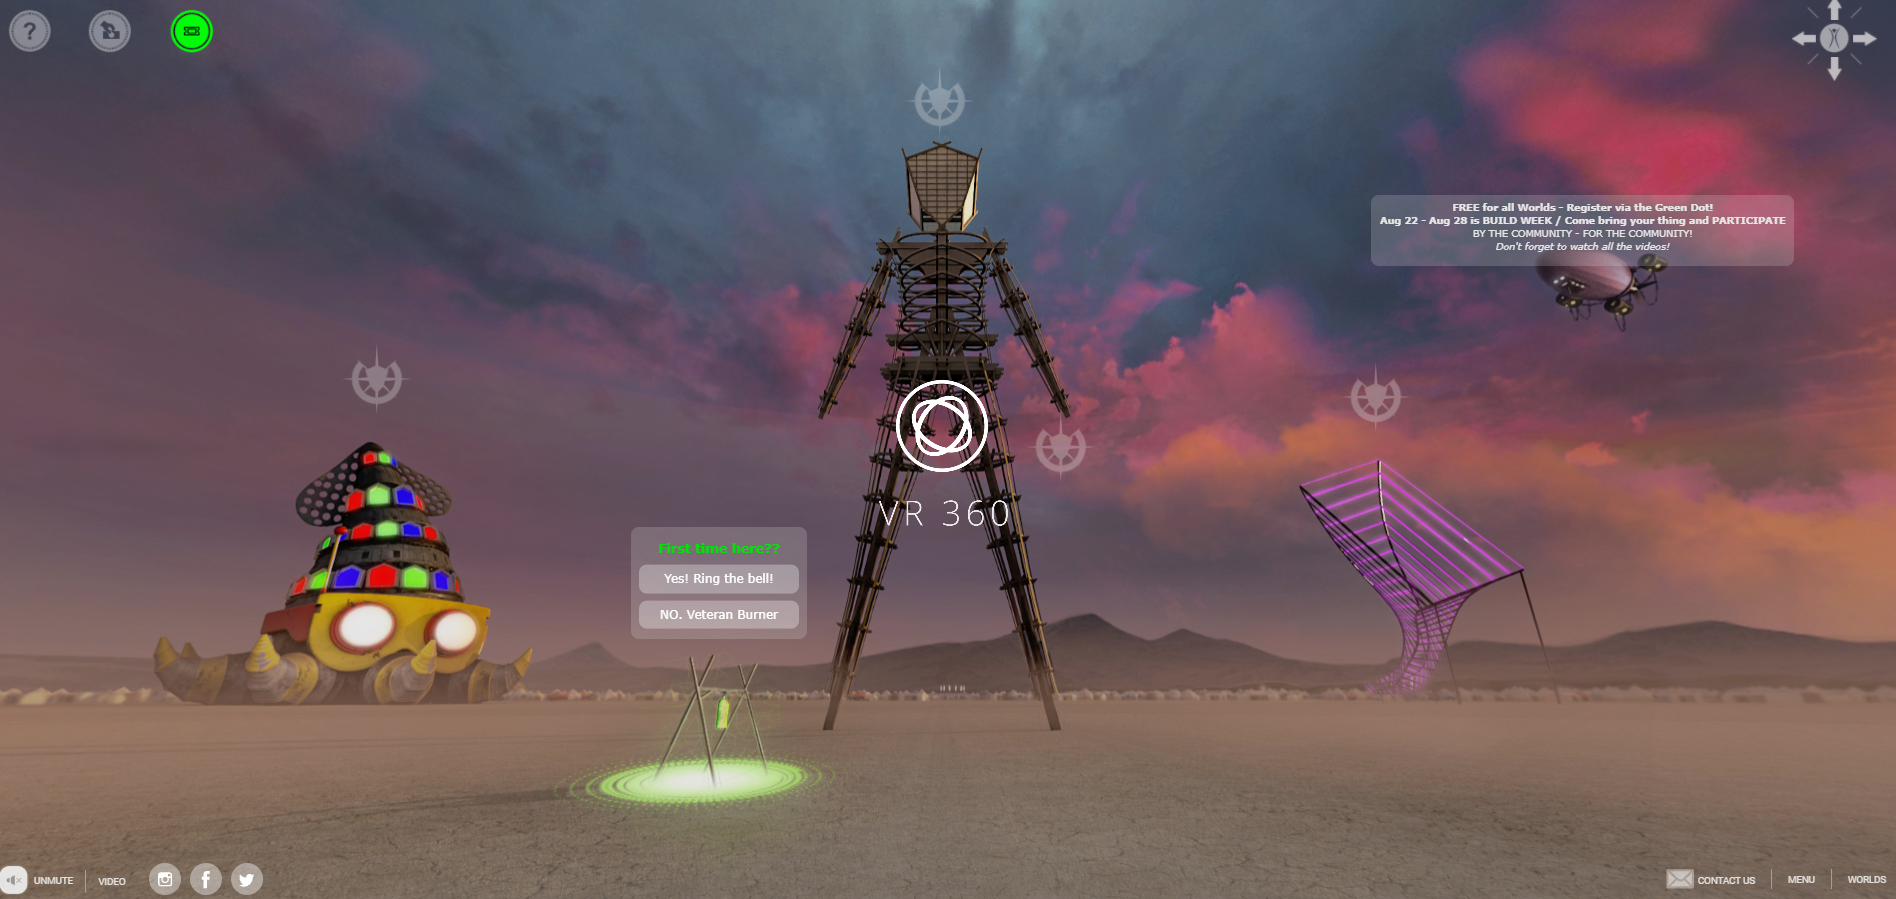 Main Page of Burning Man 2021